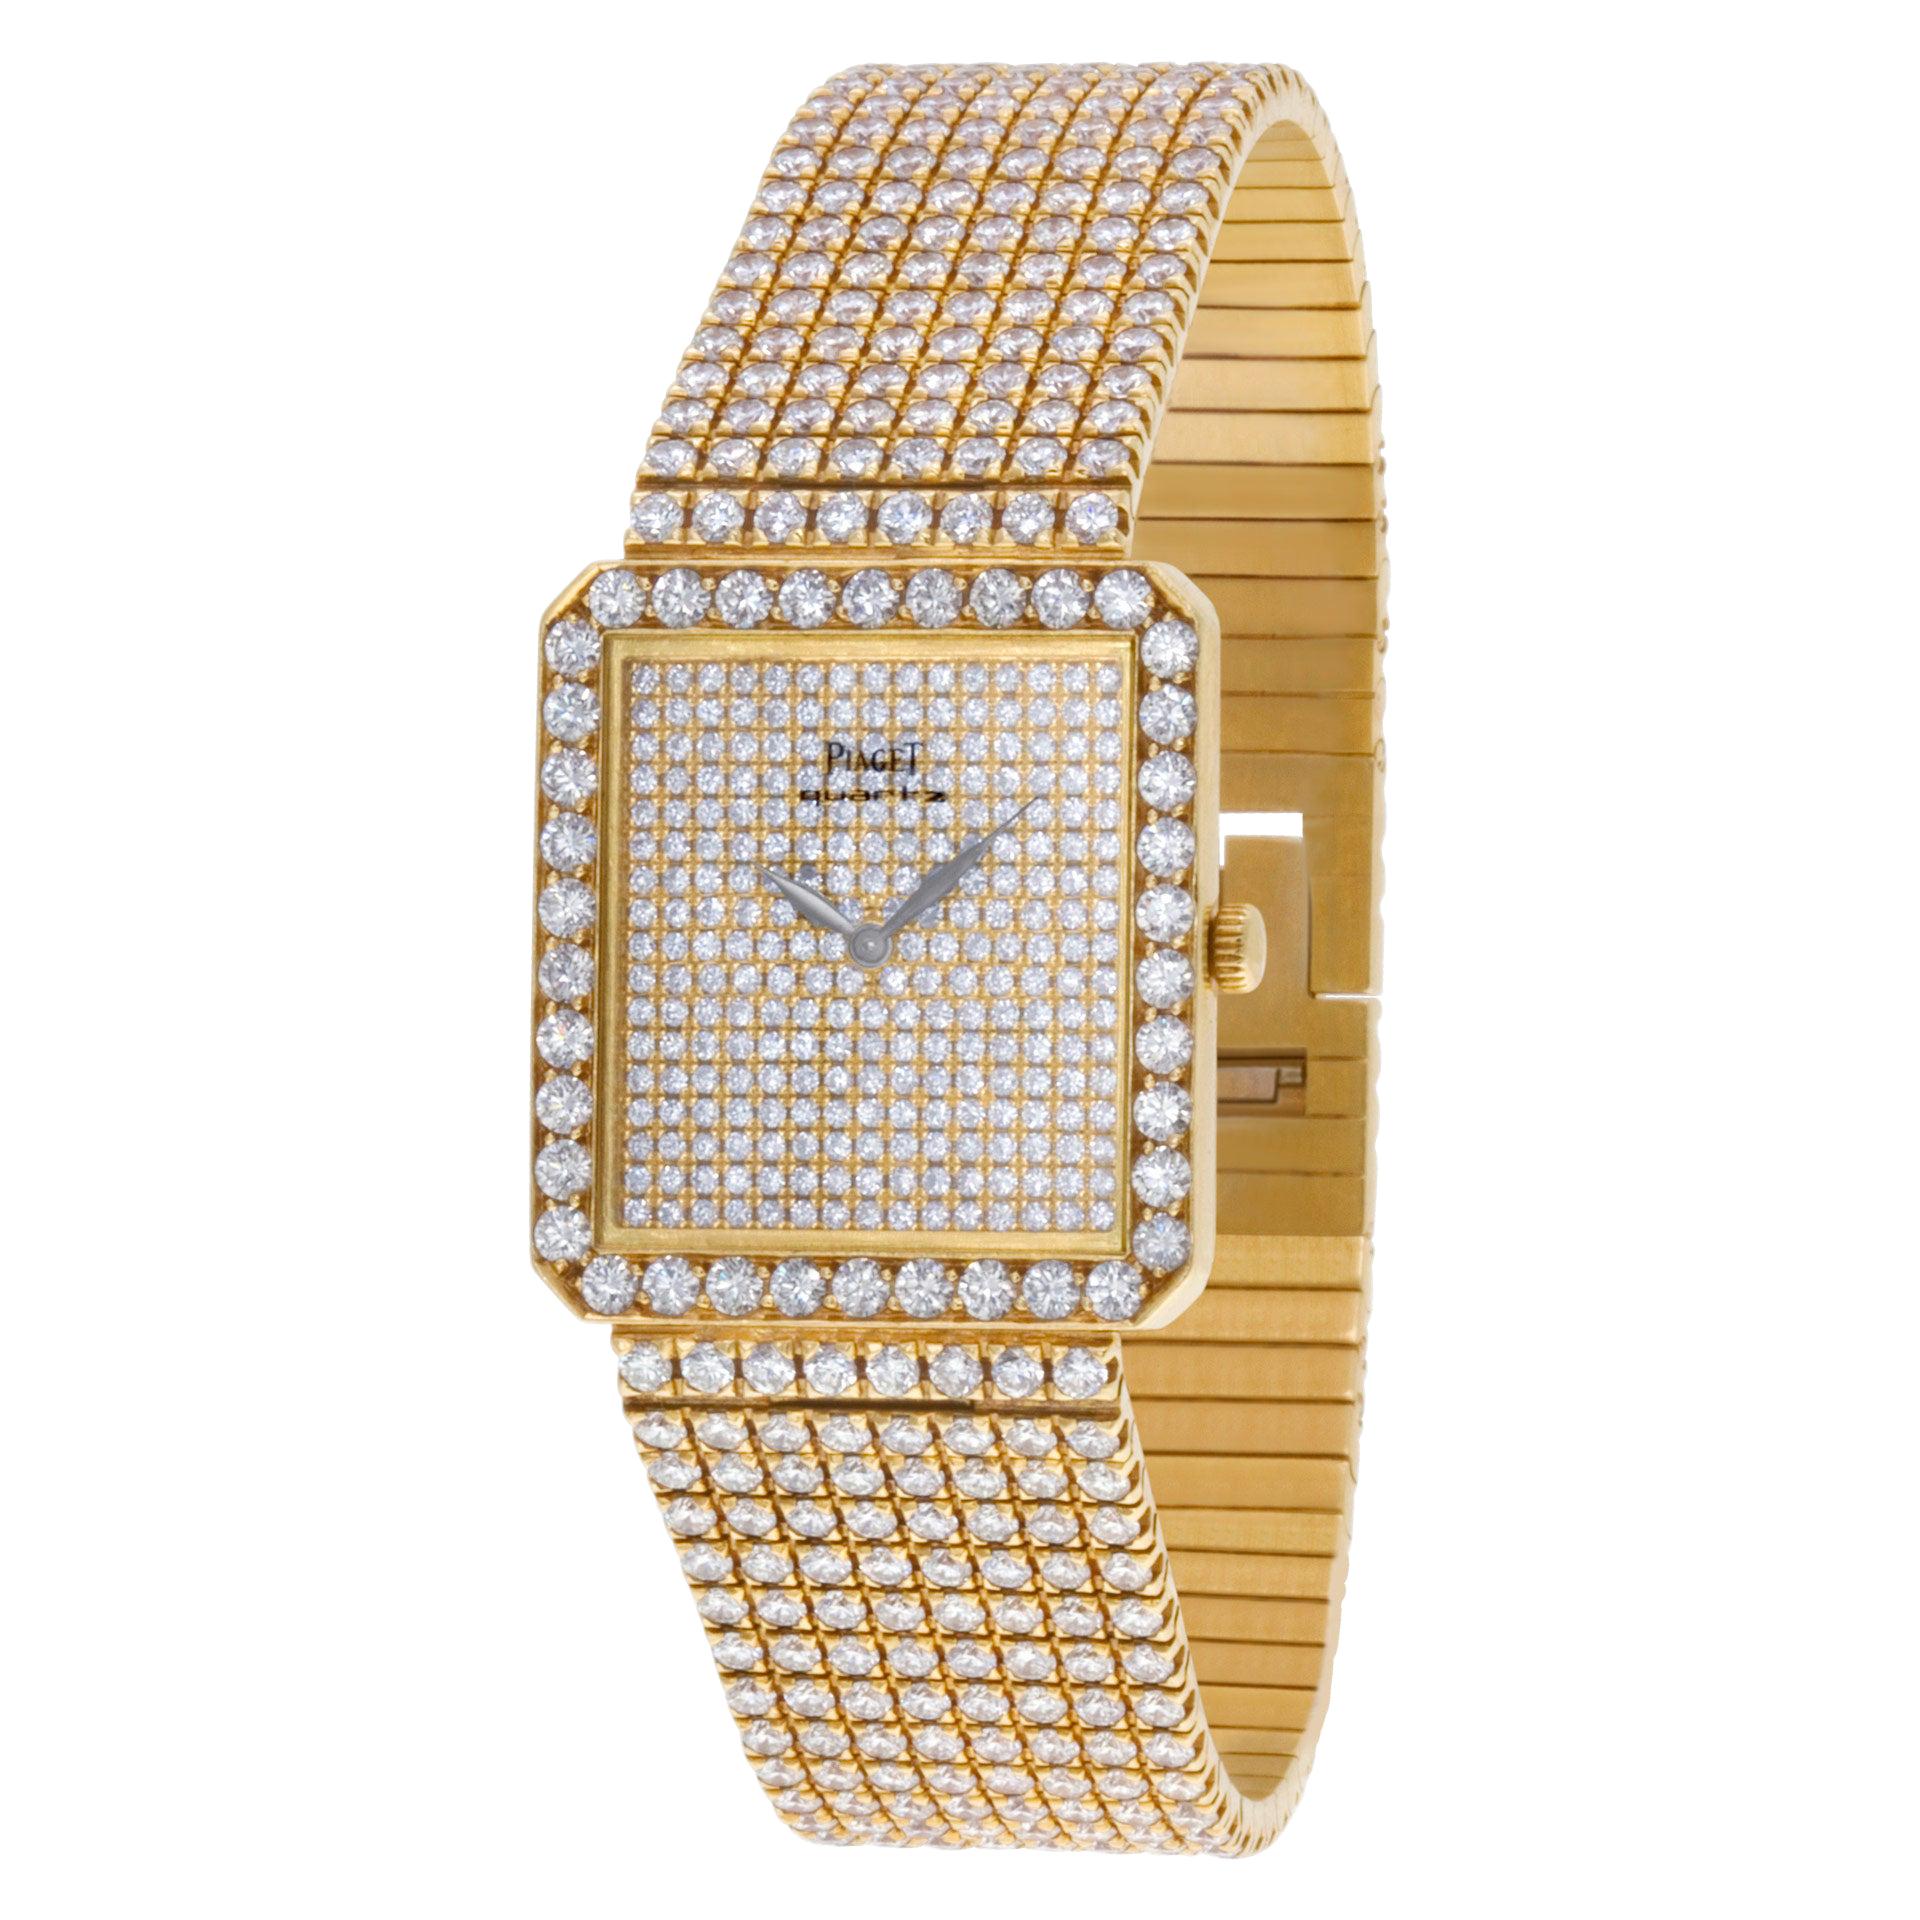 Piaget Classic 81541c626 18k with Original Pave Diamonds Quartz Watch